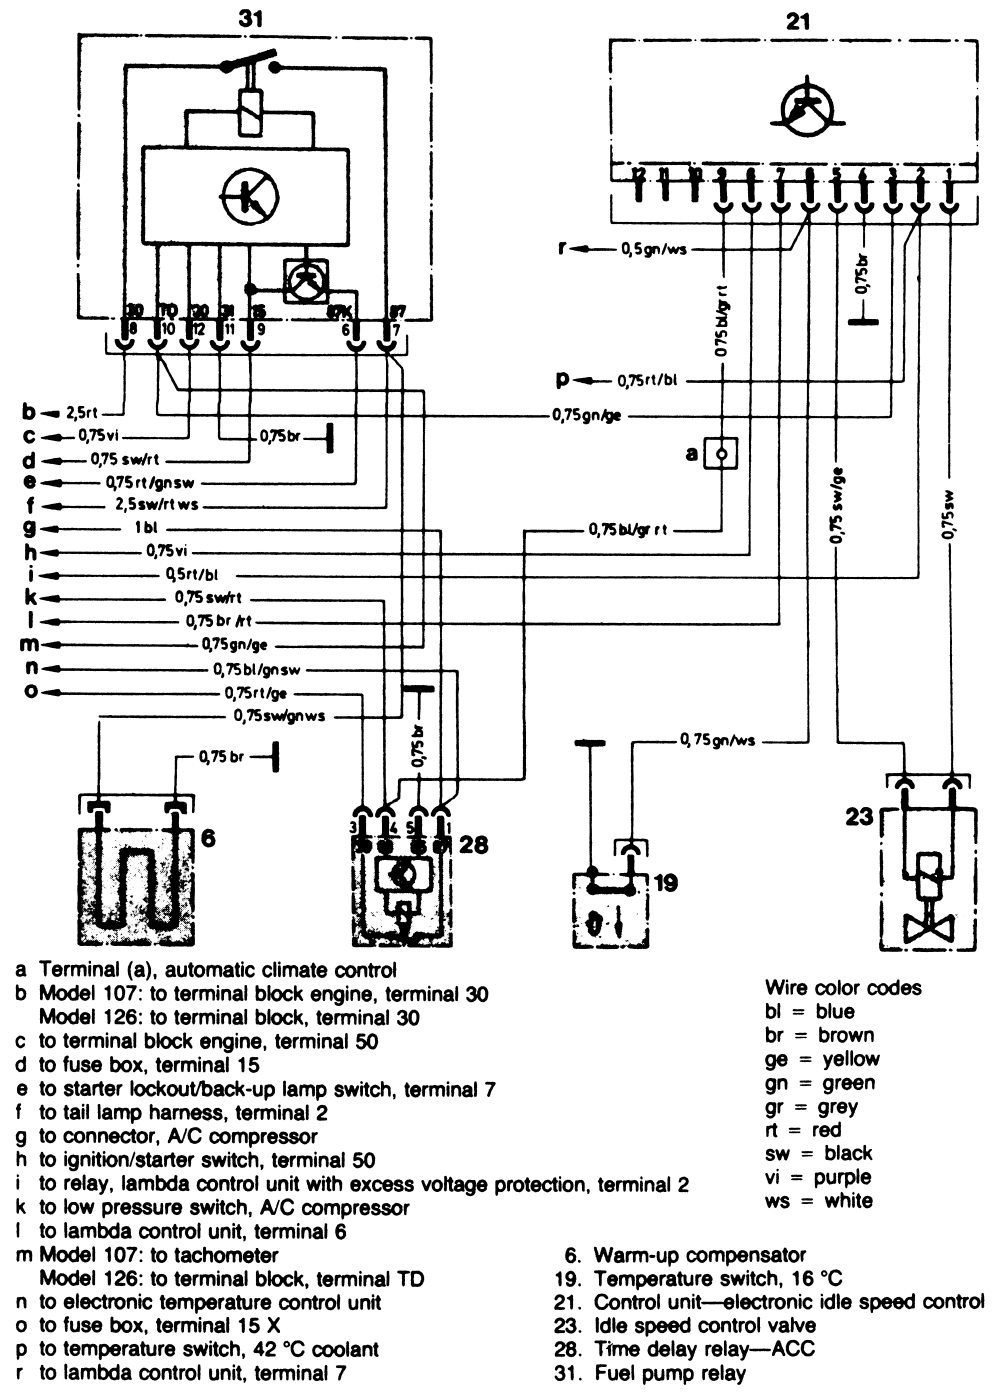 1970 mercedes 280sl wiring diagram